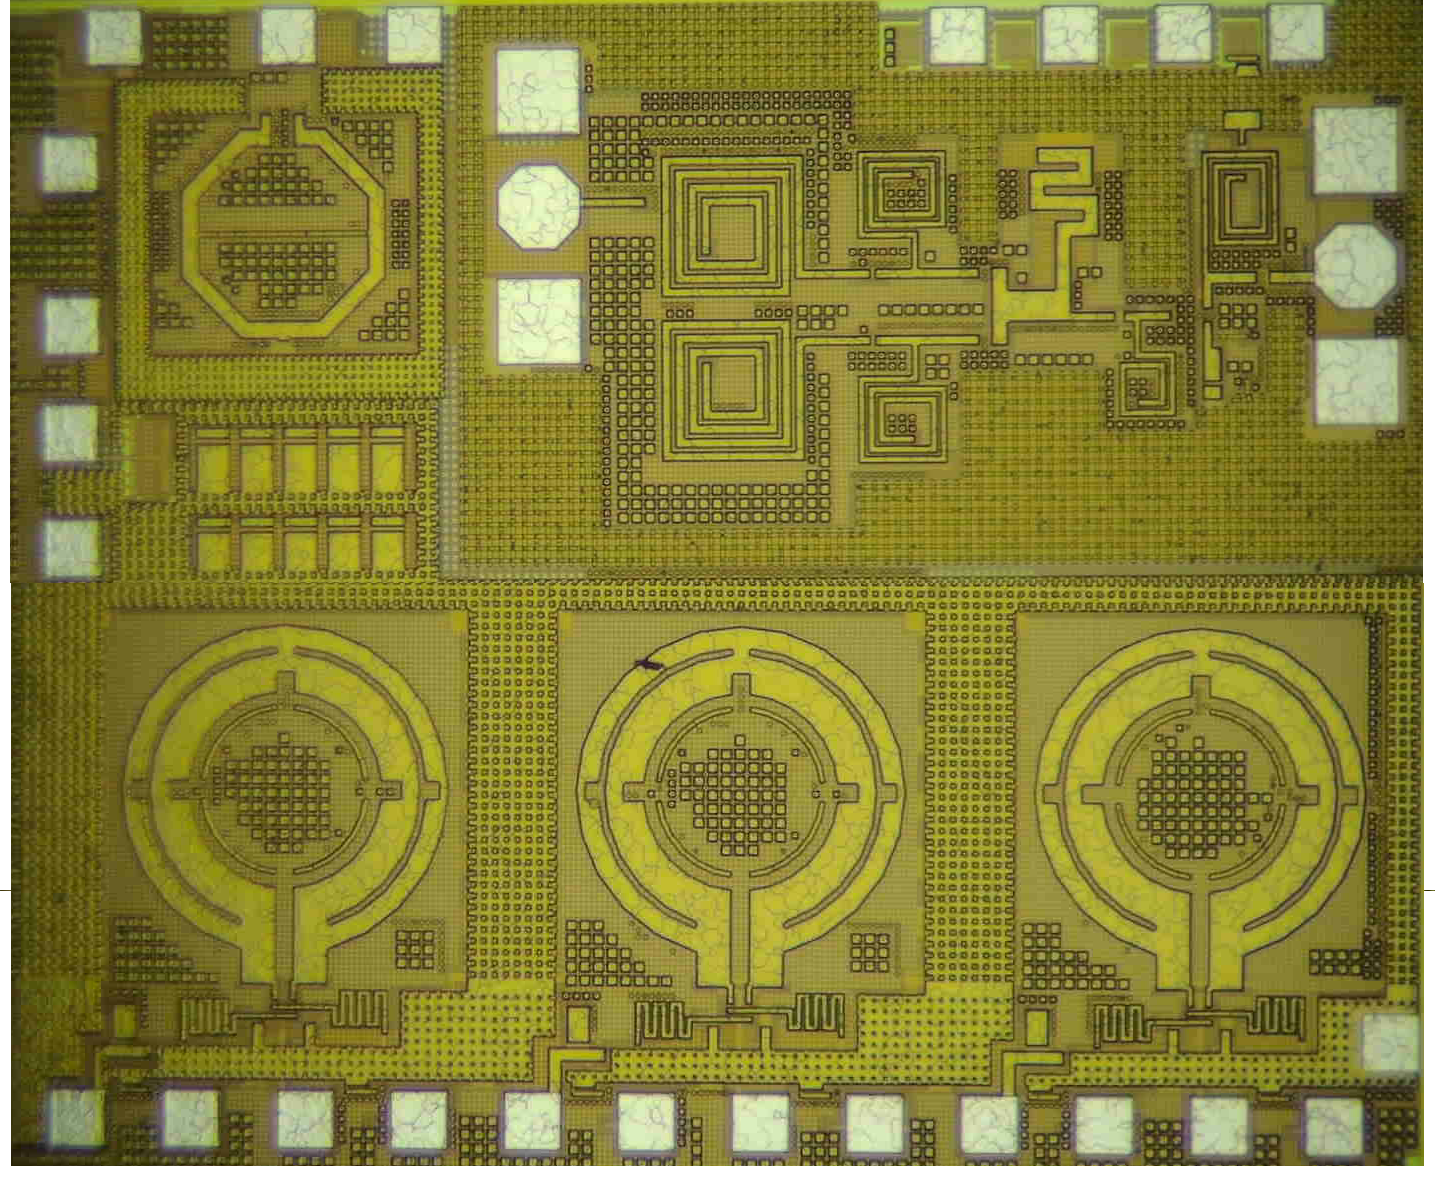 300GHz terahertz detector chip